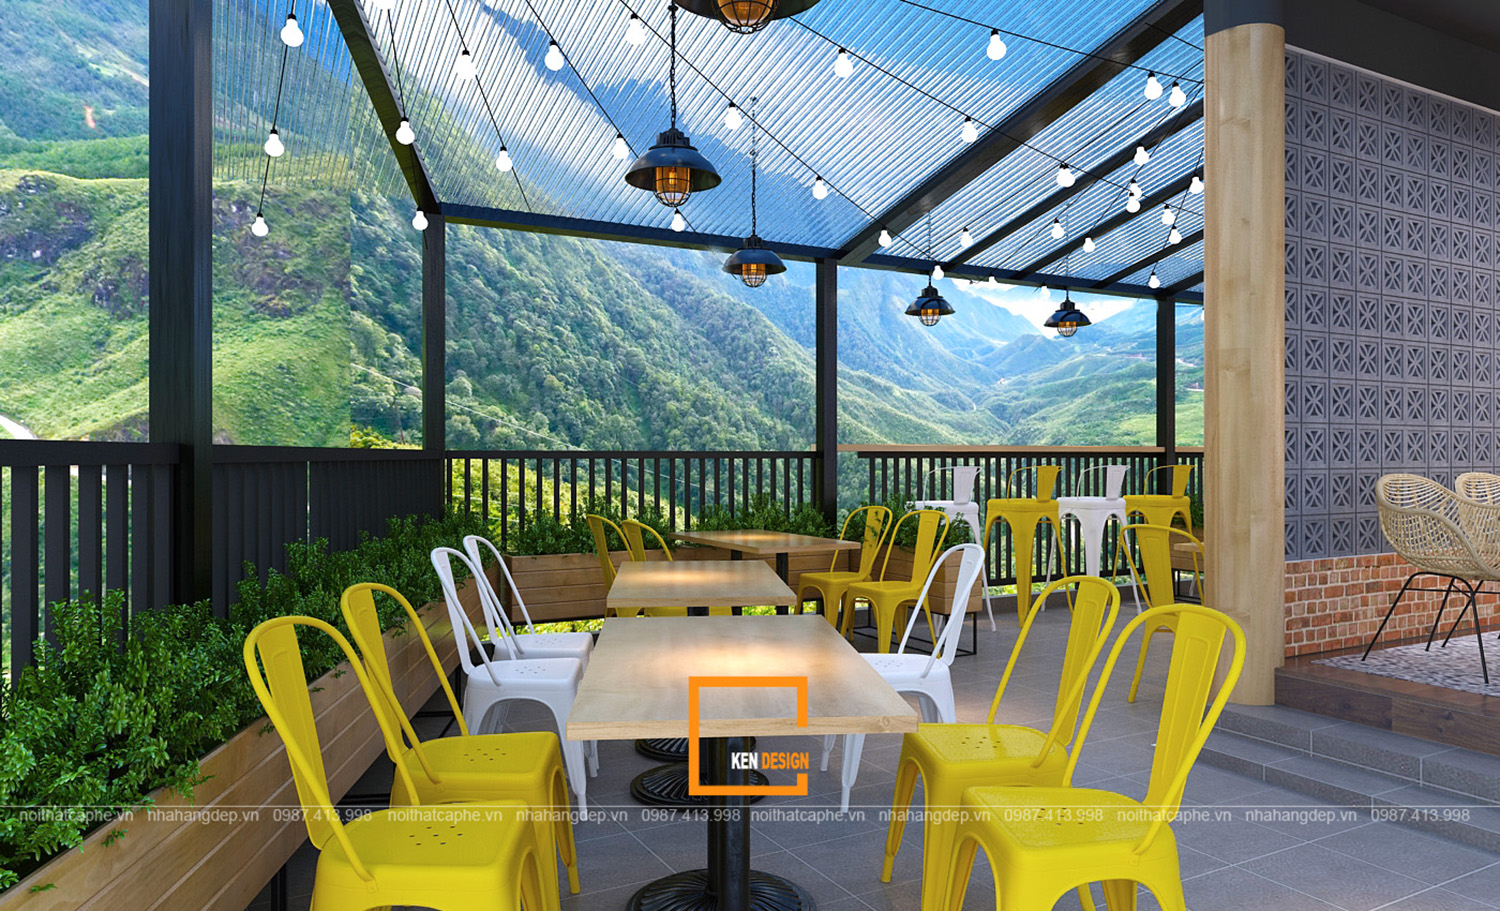 Tang Quai Lau Coffee Homestay Design Project 